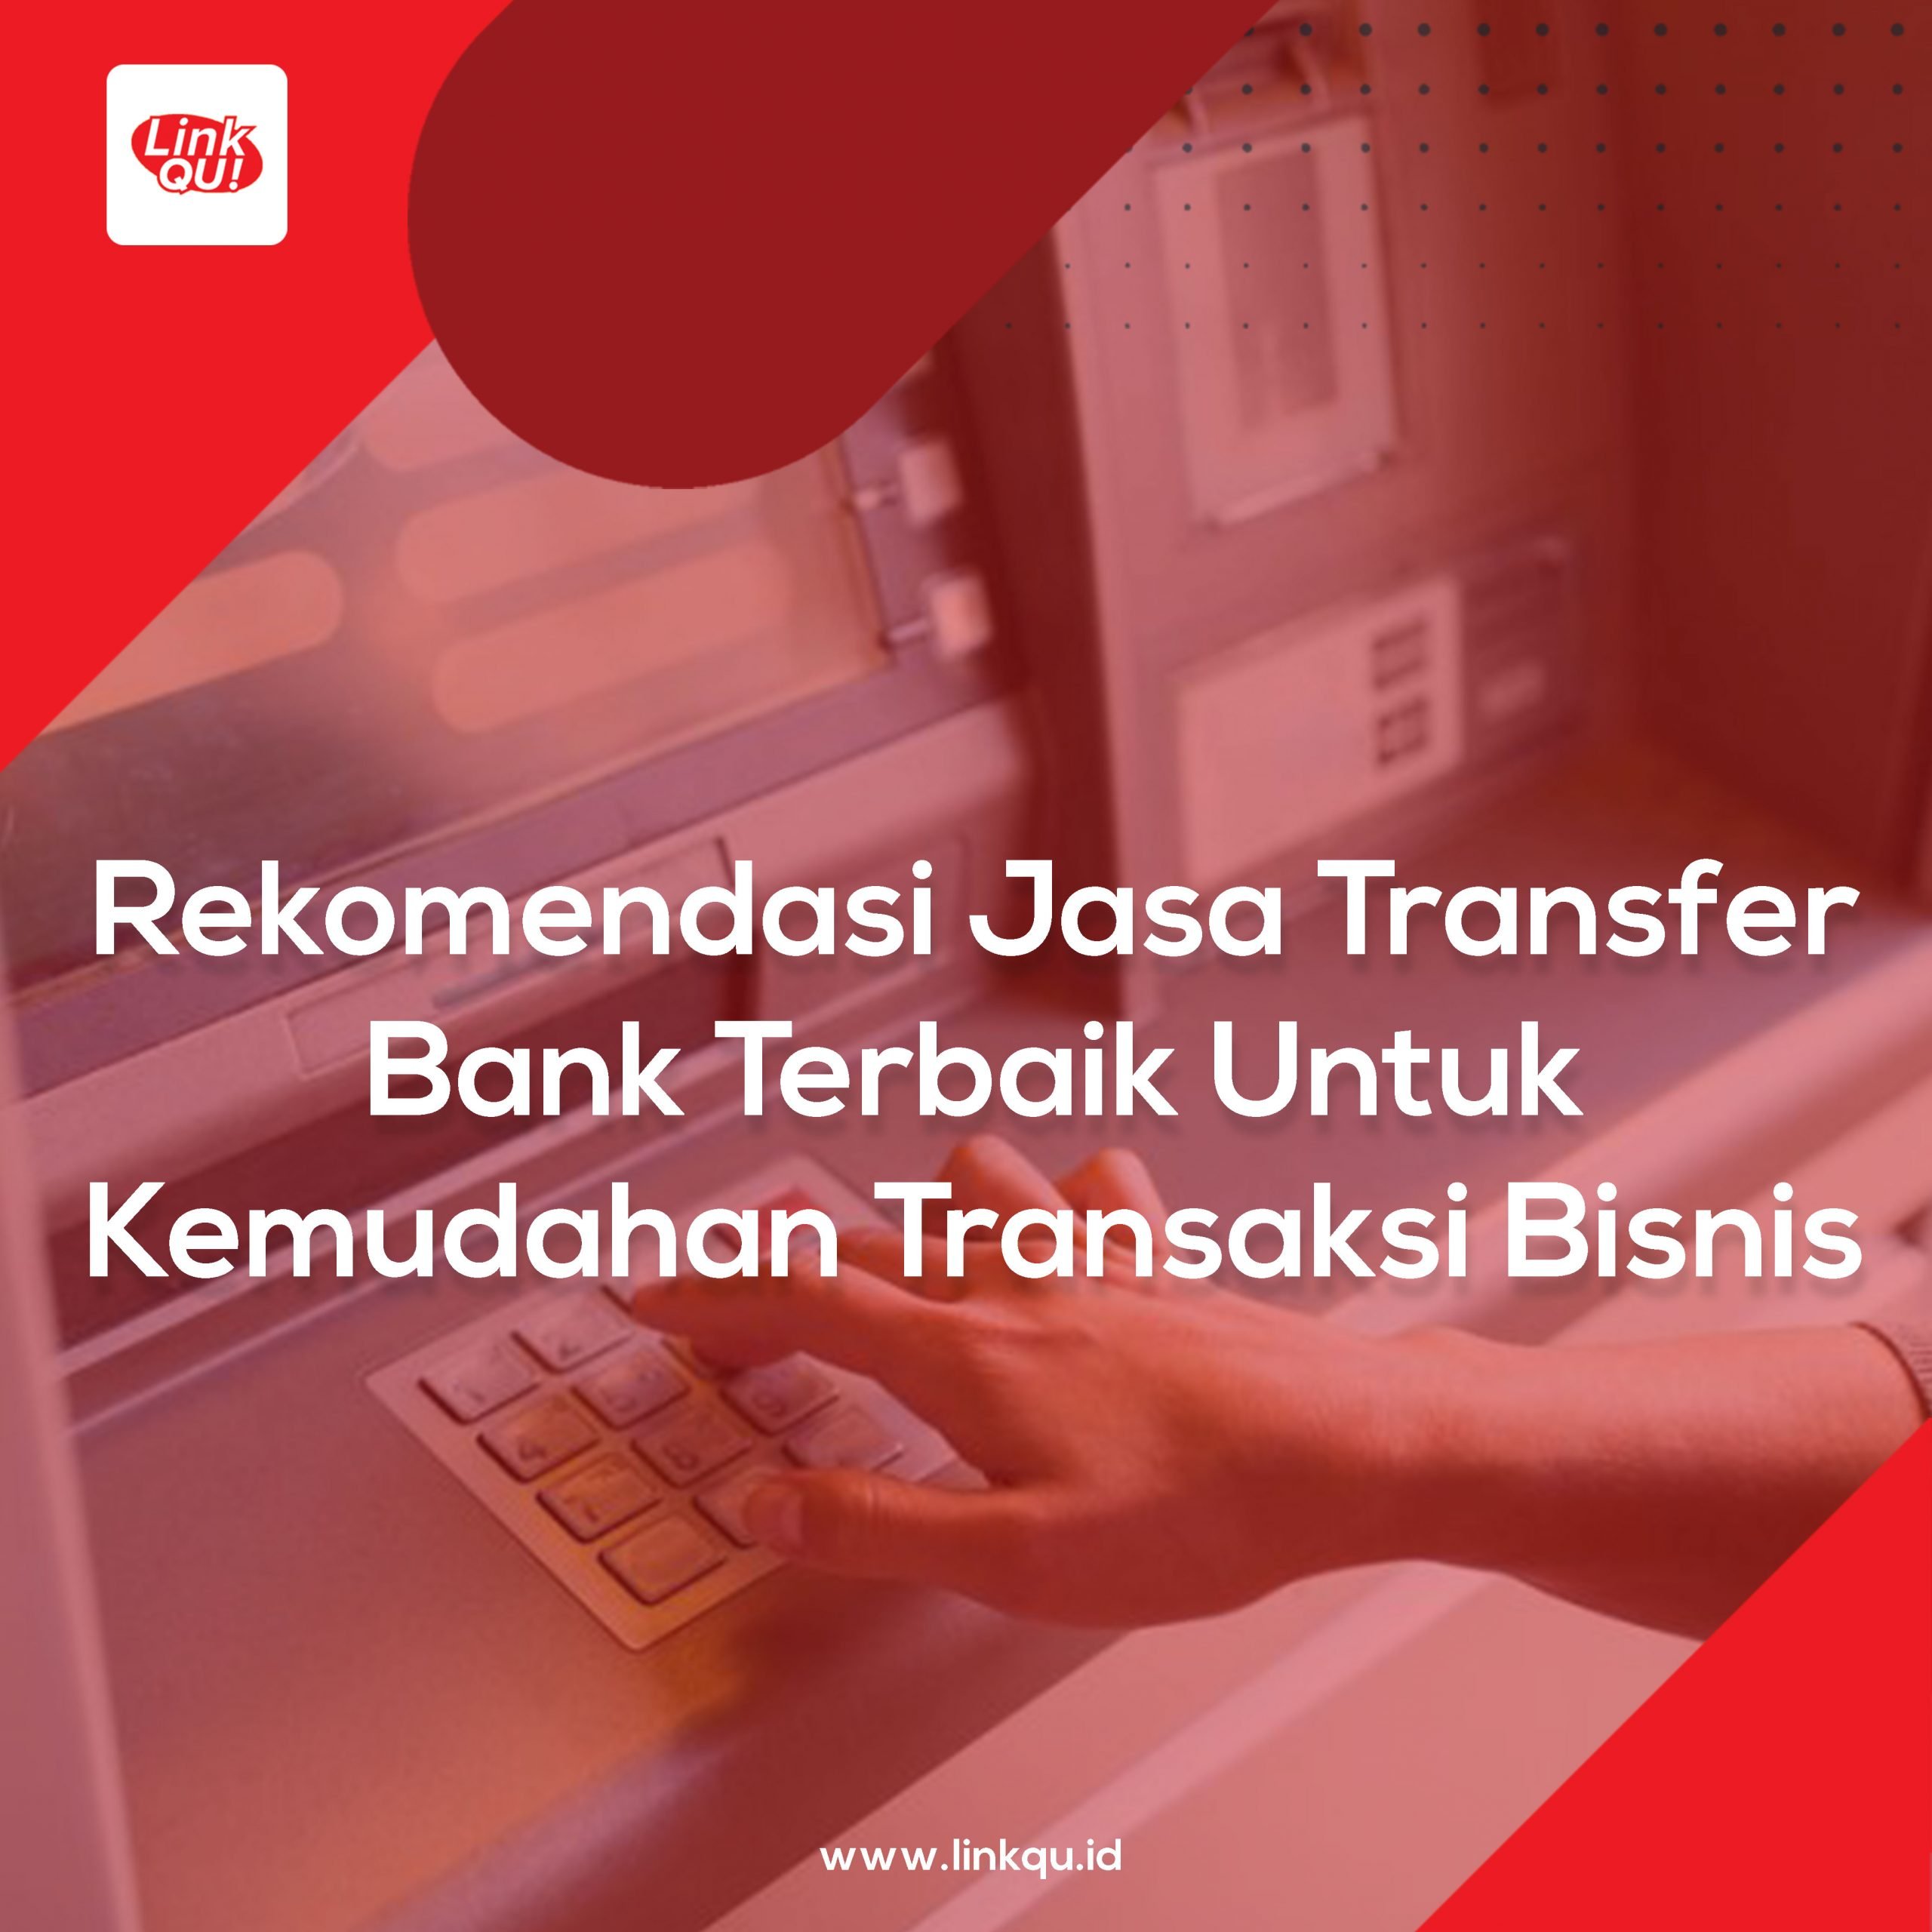 https://www.linkqu.id/artikel/solusi-hemat-transfer-bank-terbaik/